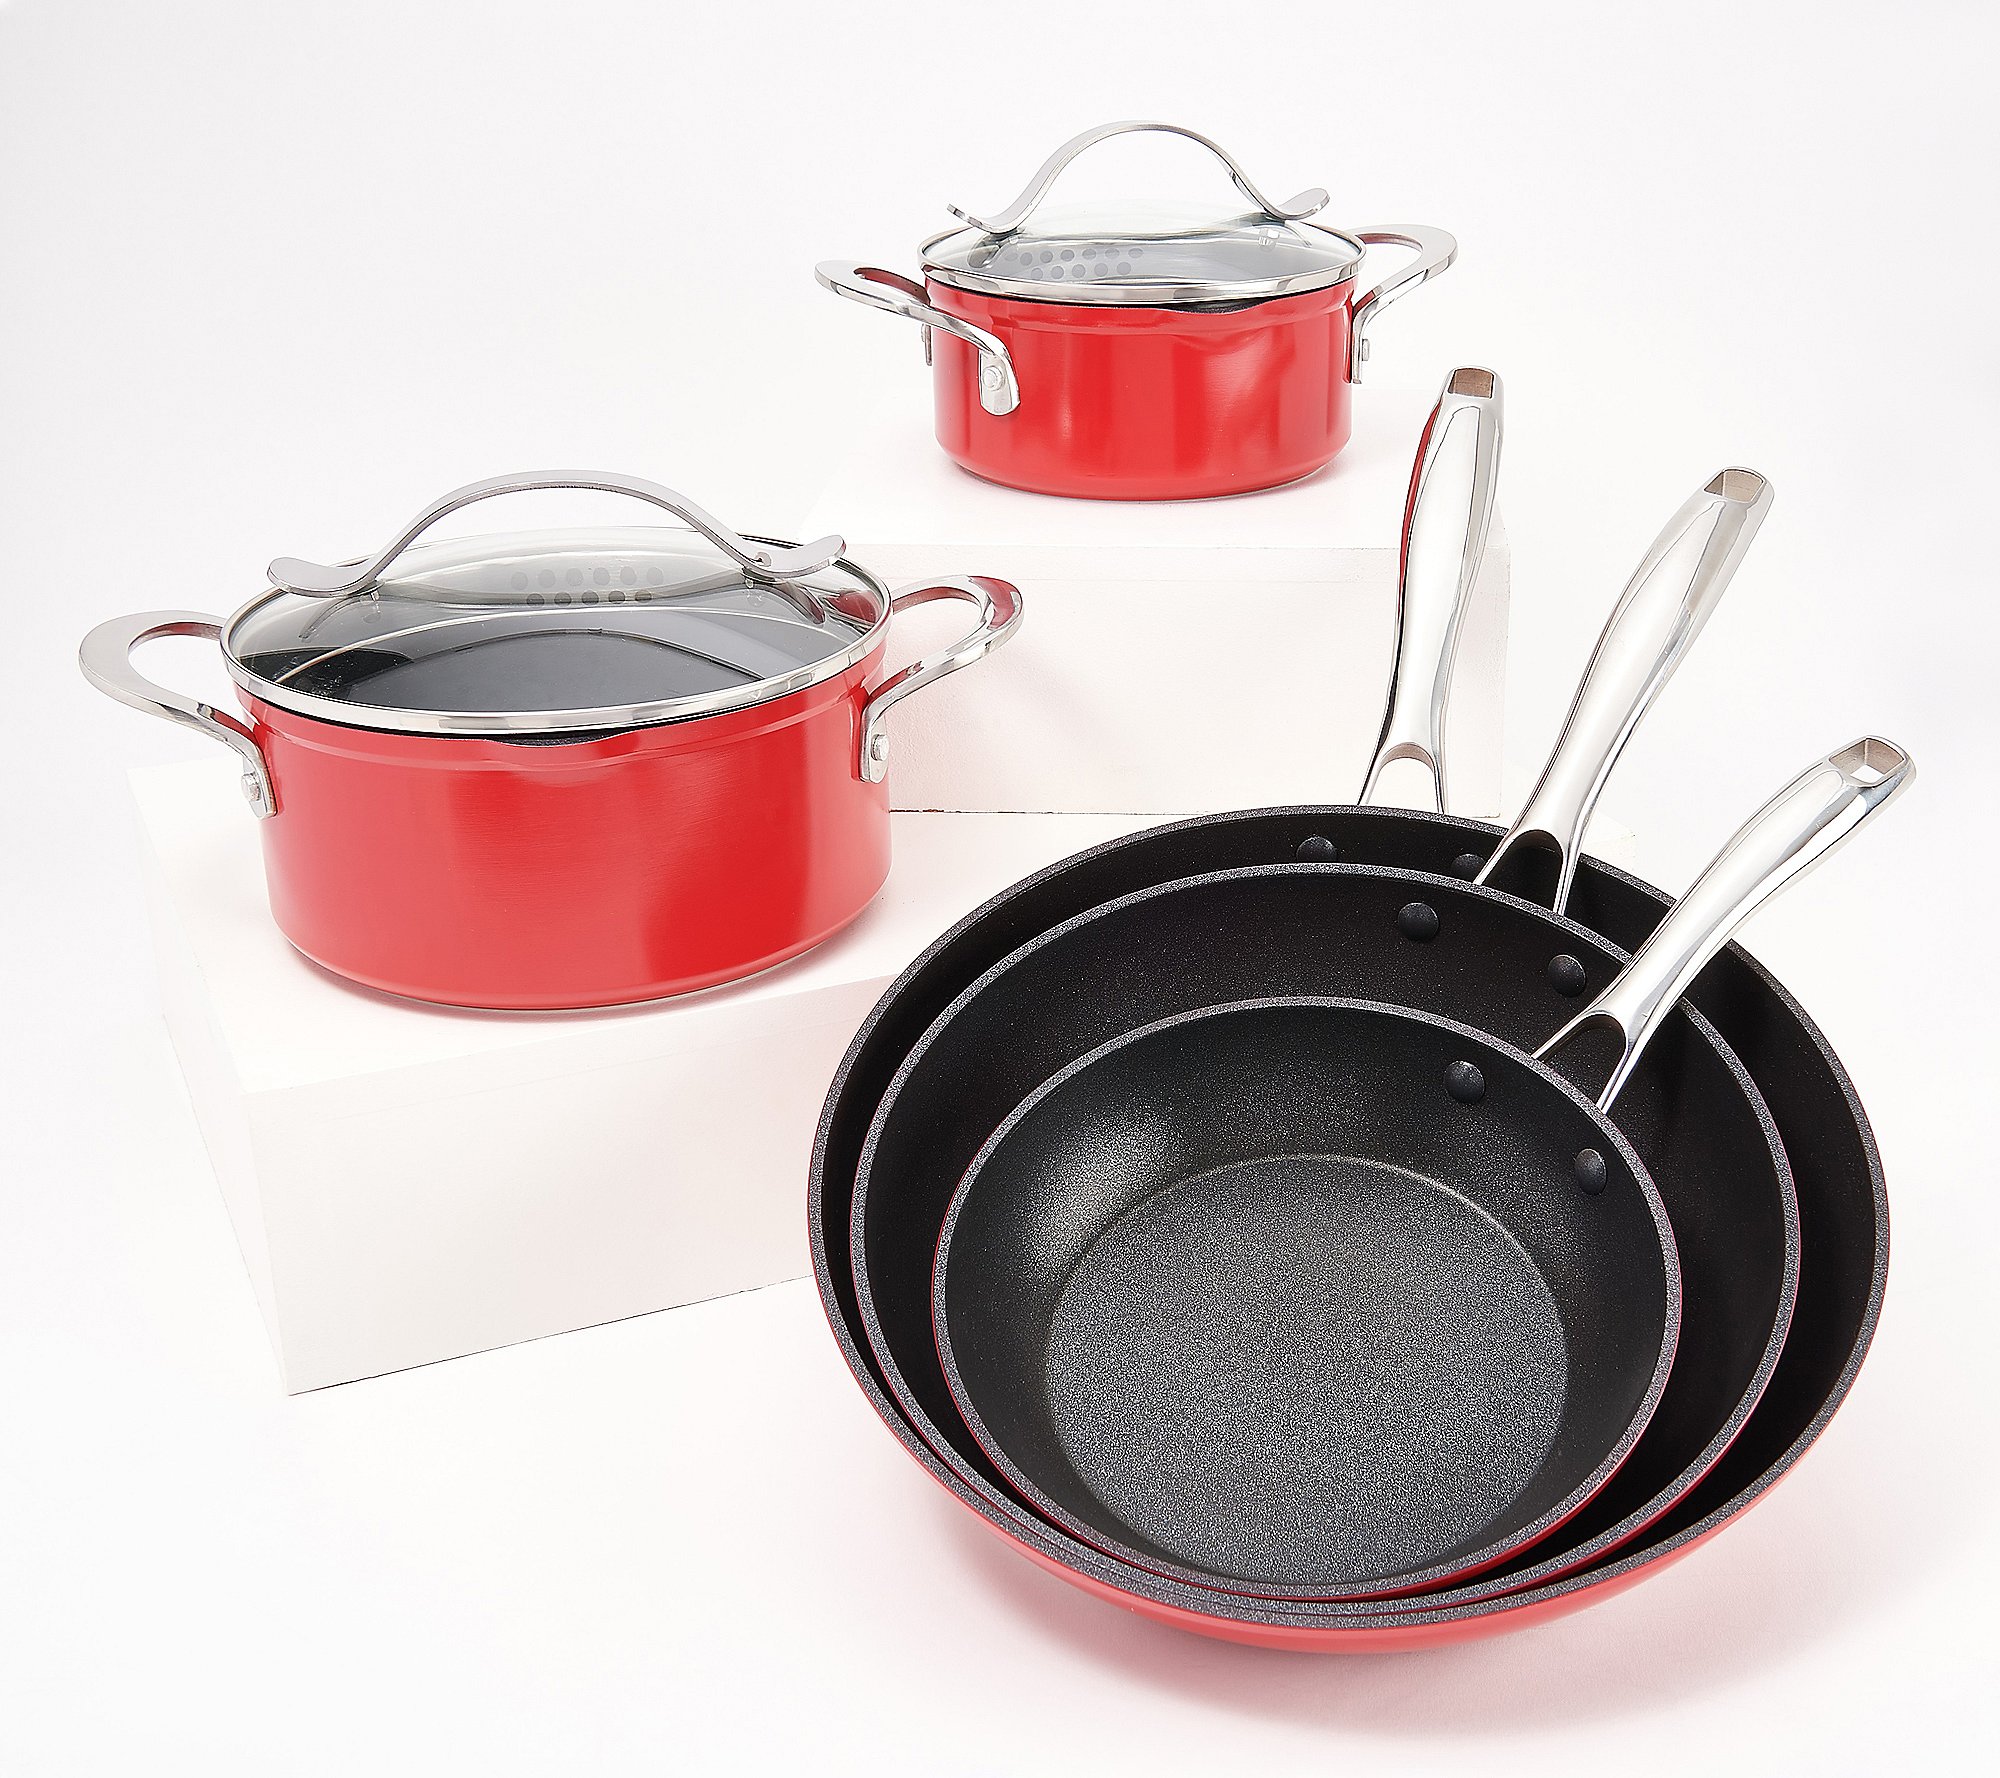 Cook's Essentials 7-Piece Forged Aluminum Cookware Set